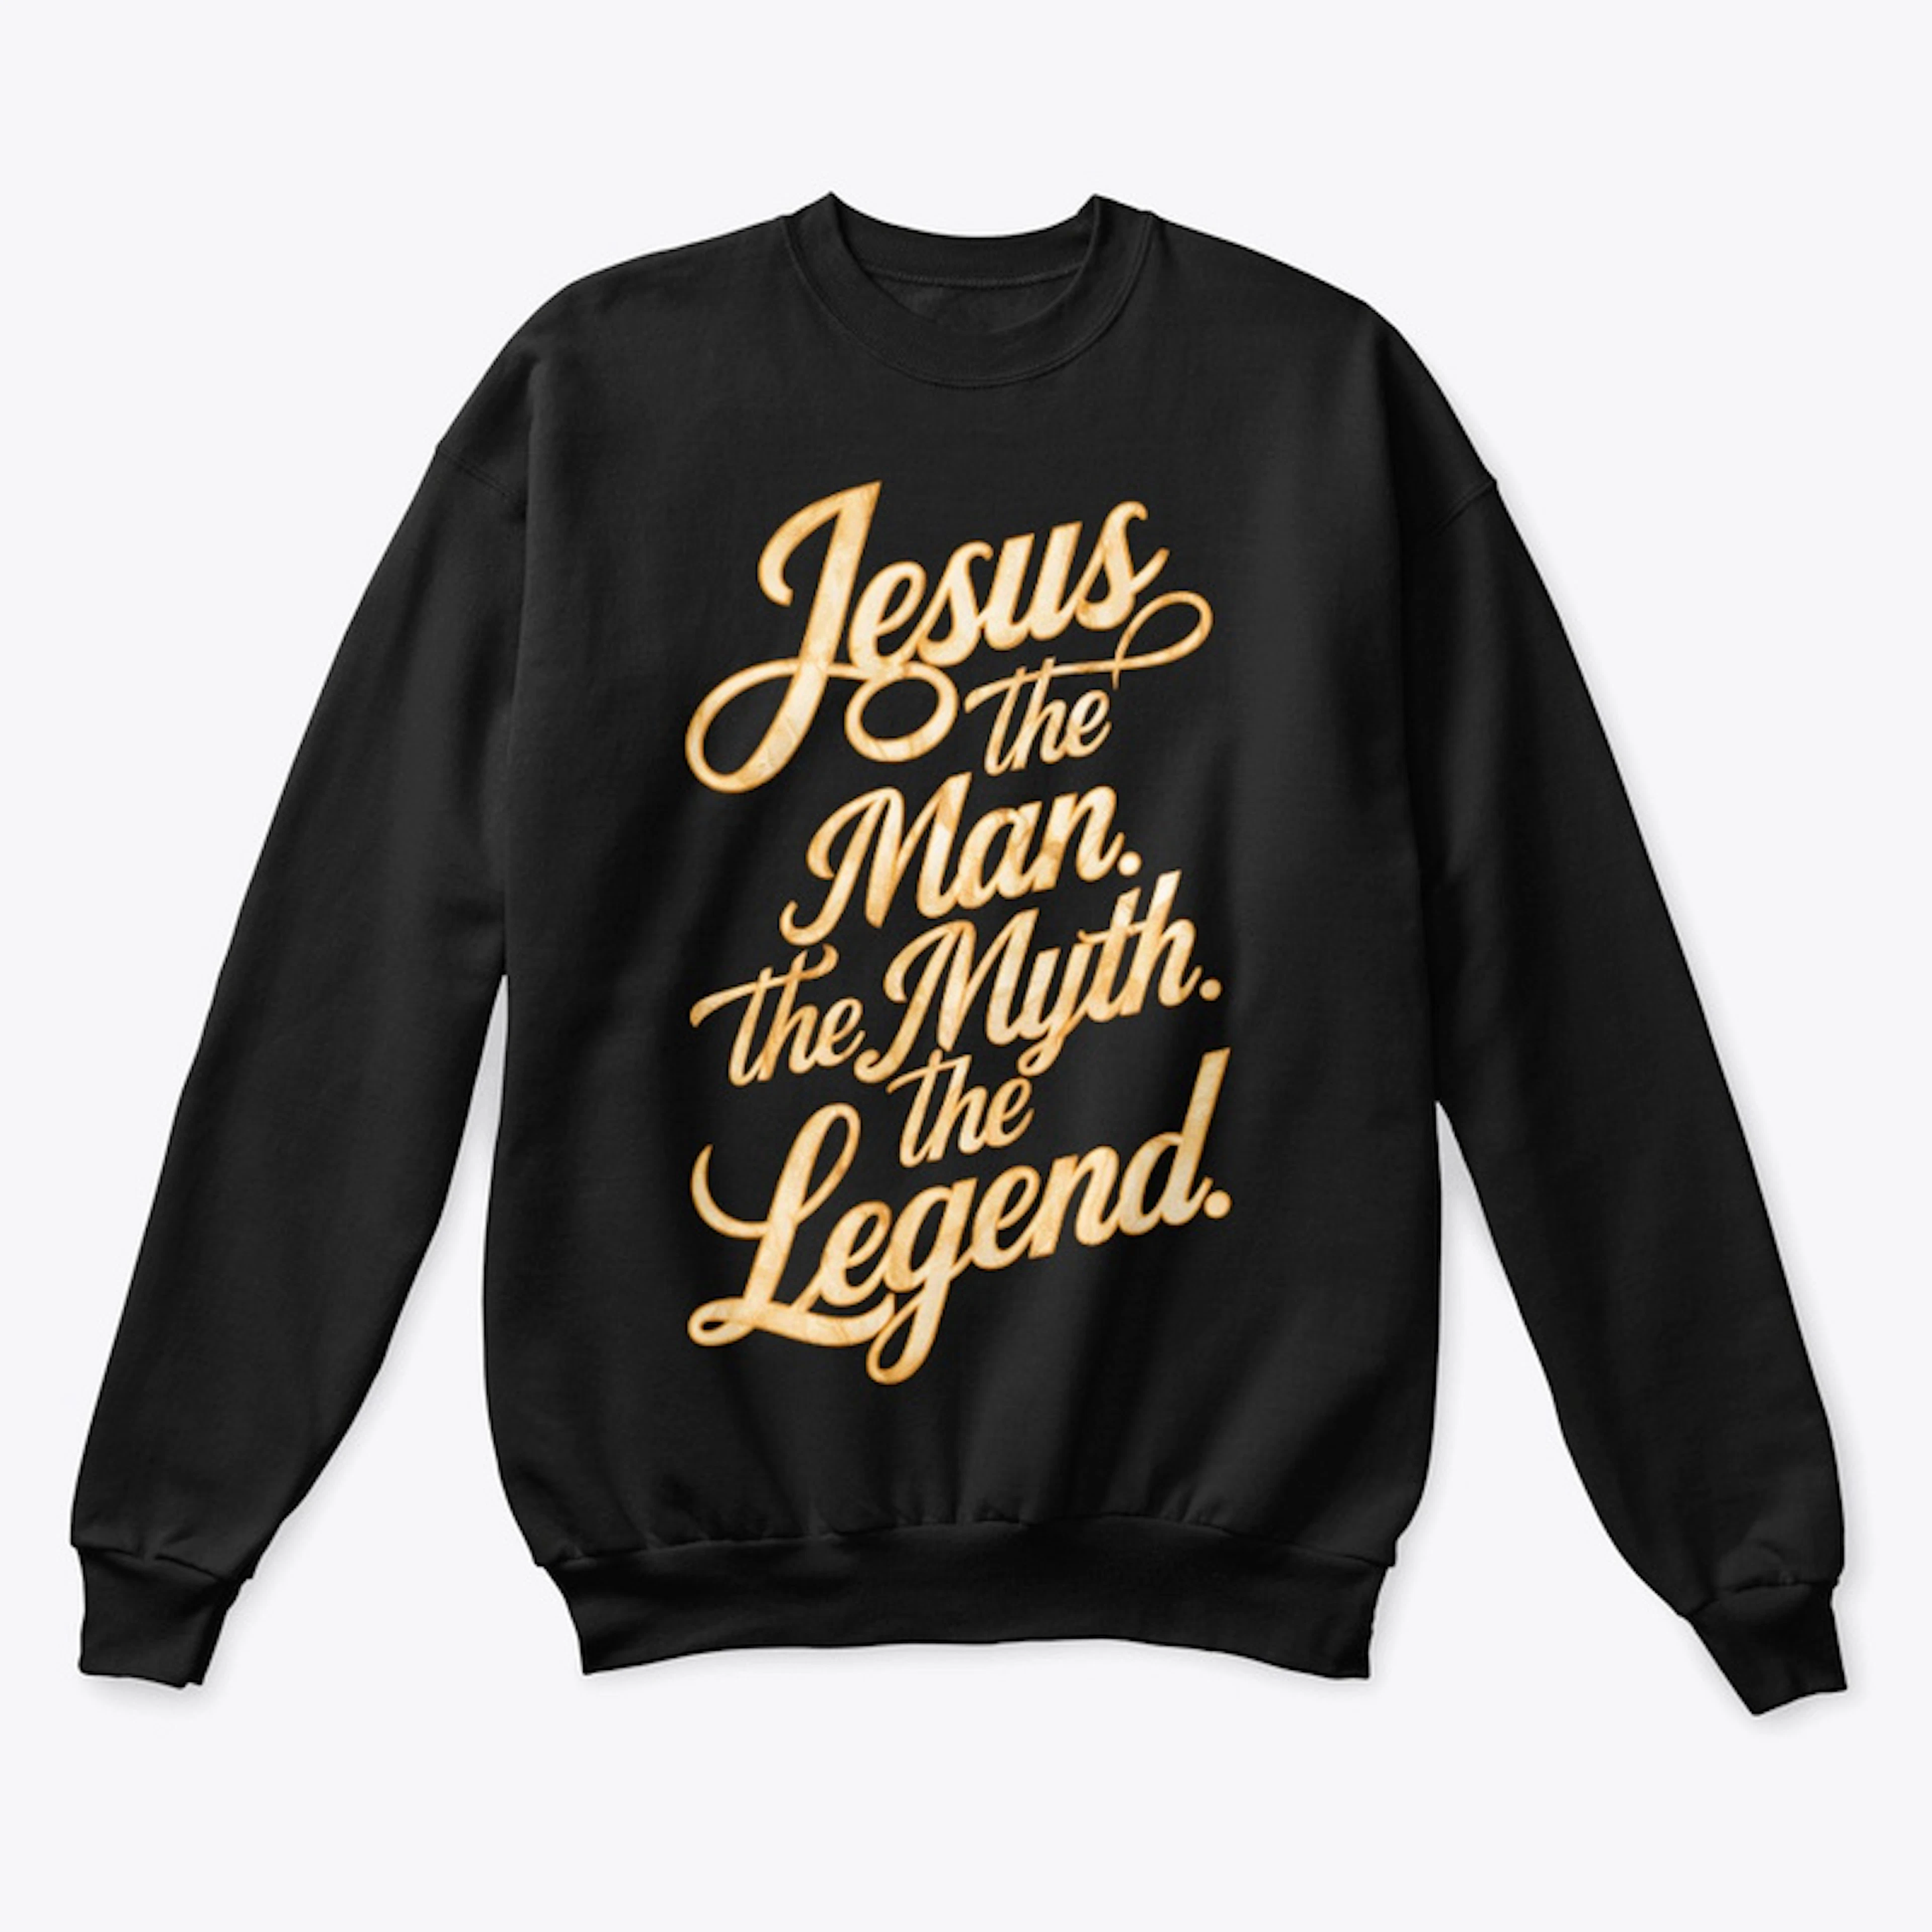 Jesus: The Man. The Myth. The Legend. 